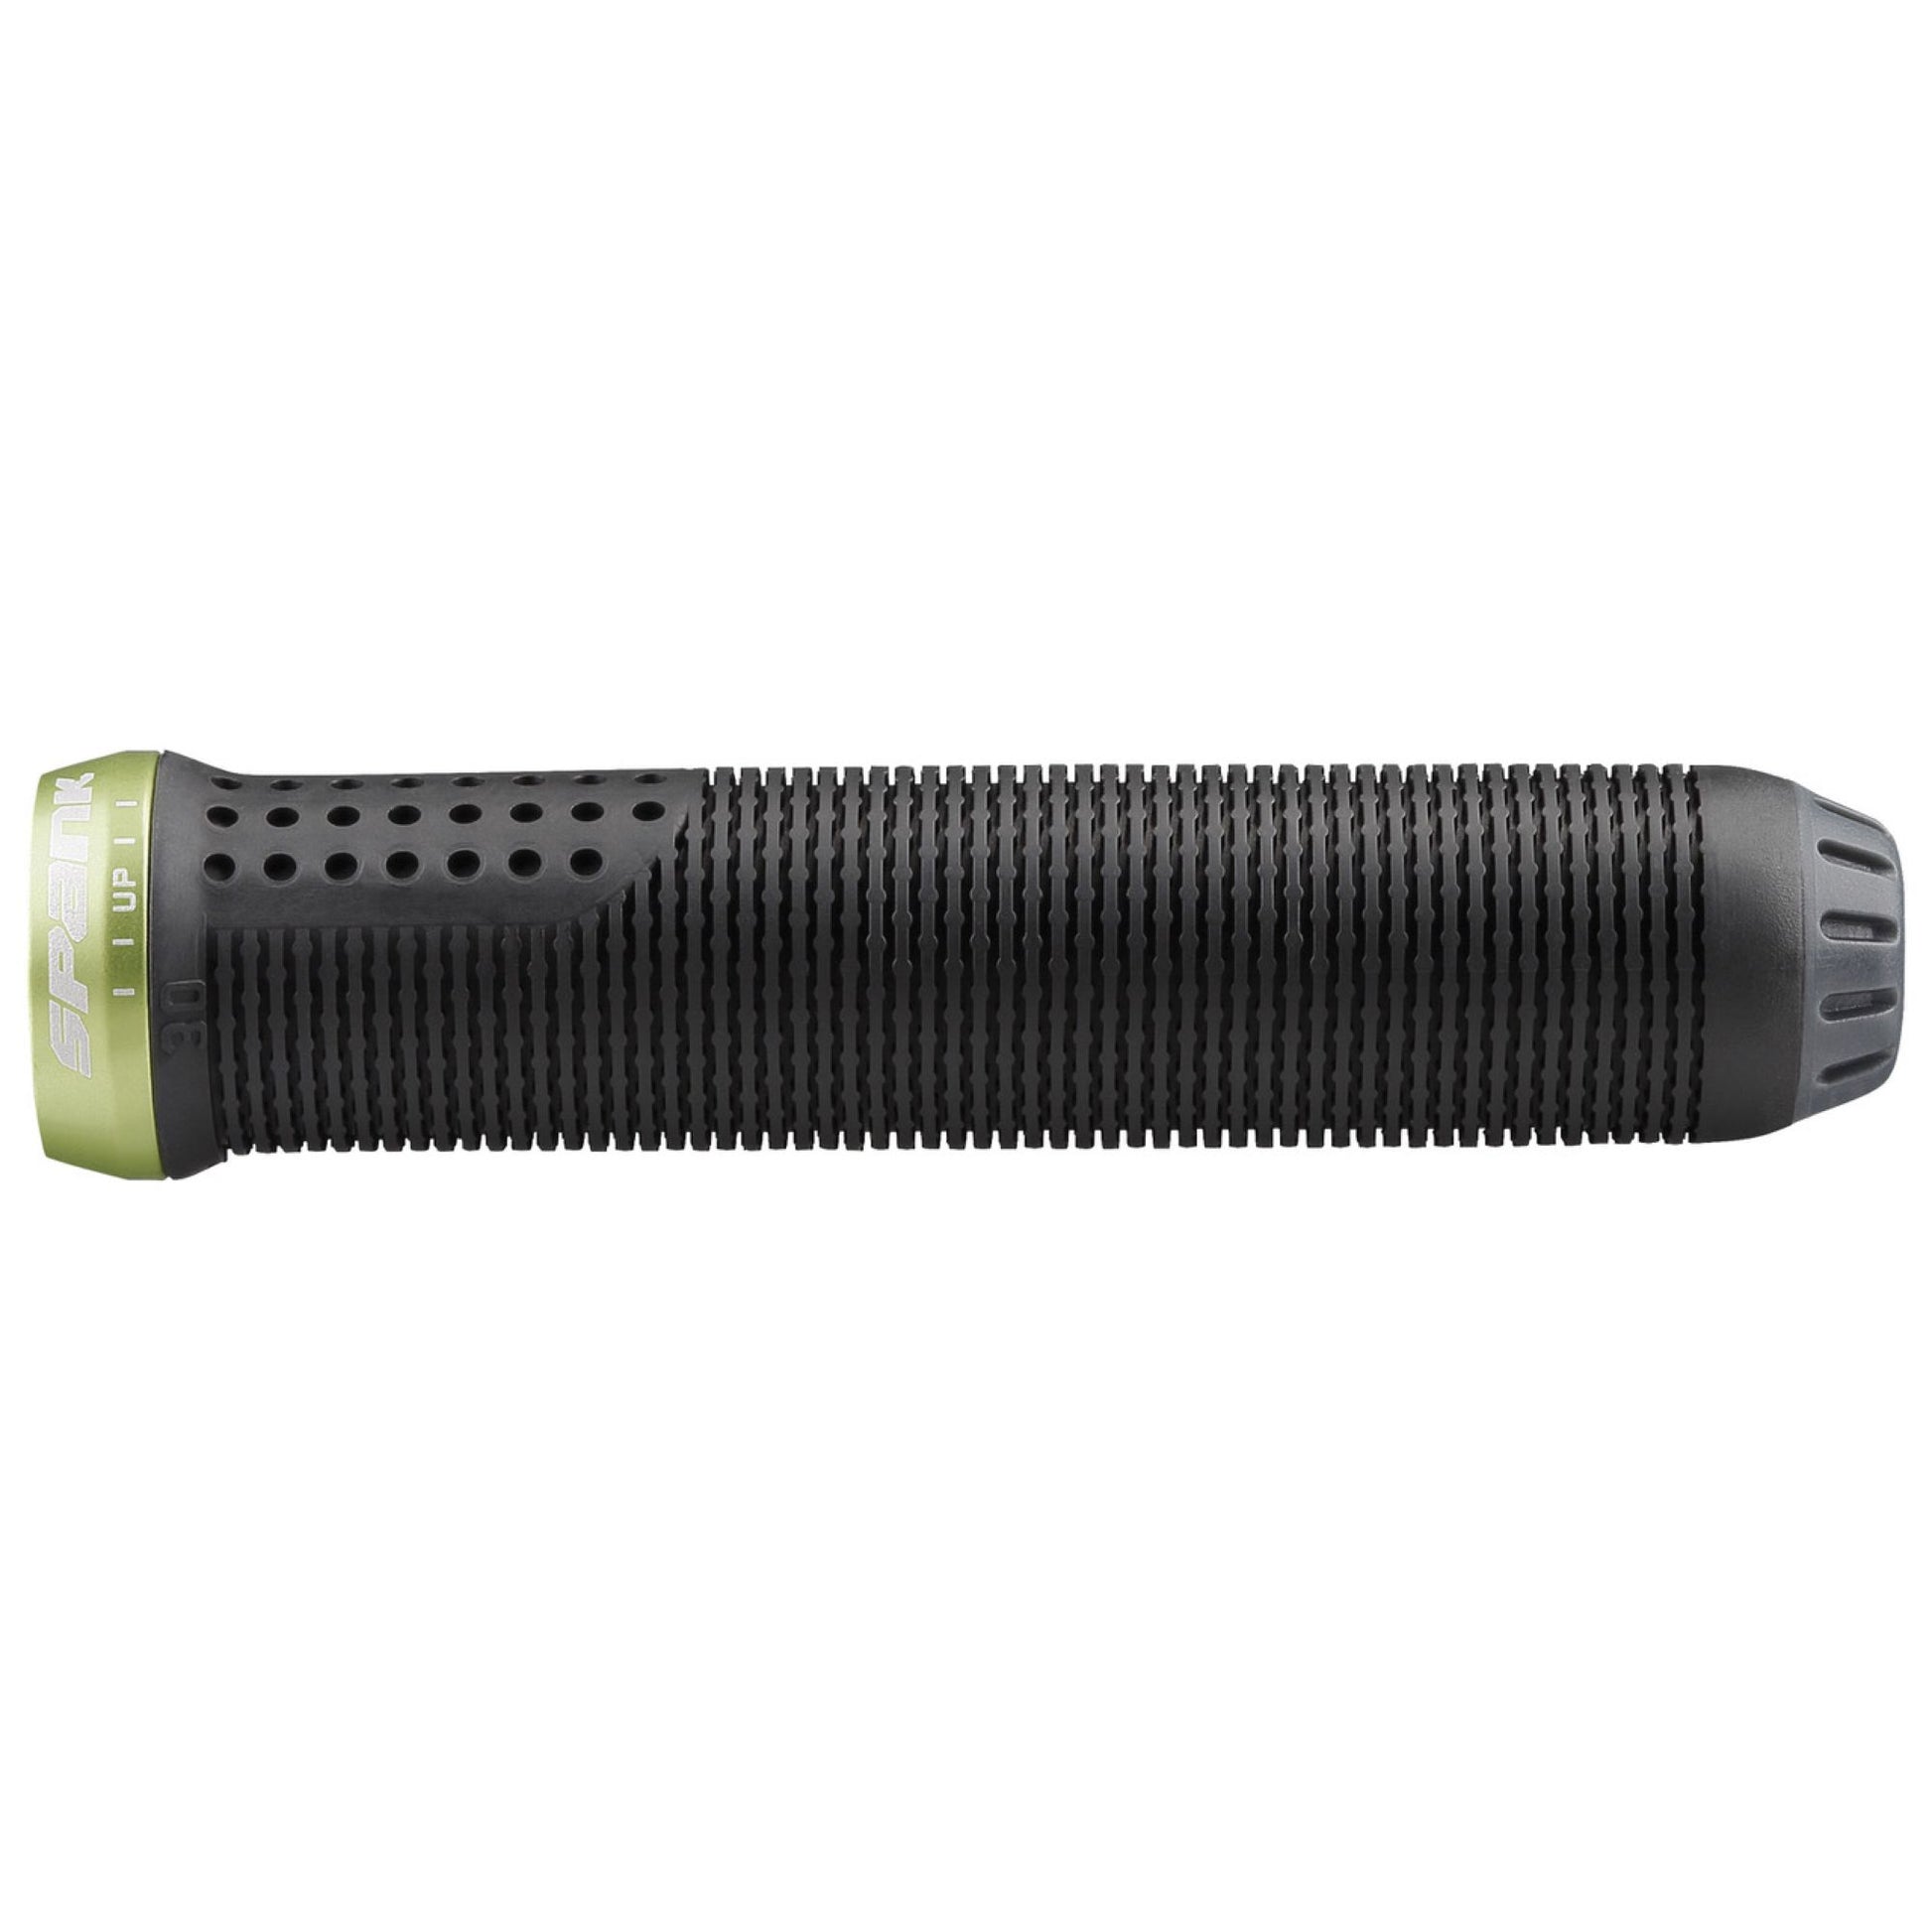 Spank Spike Grip 30 Black/Green 30x145mm Grips & Tape